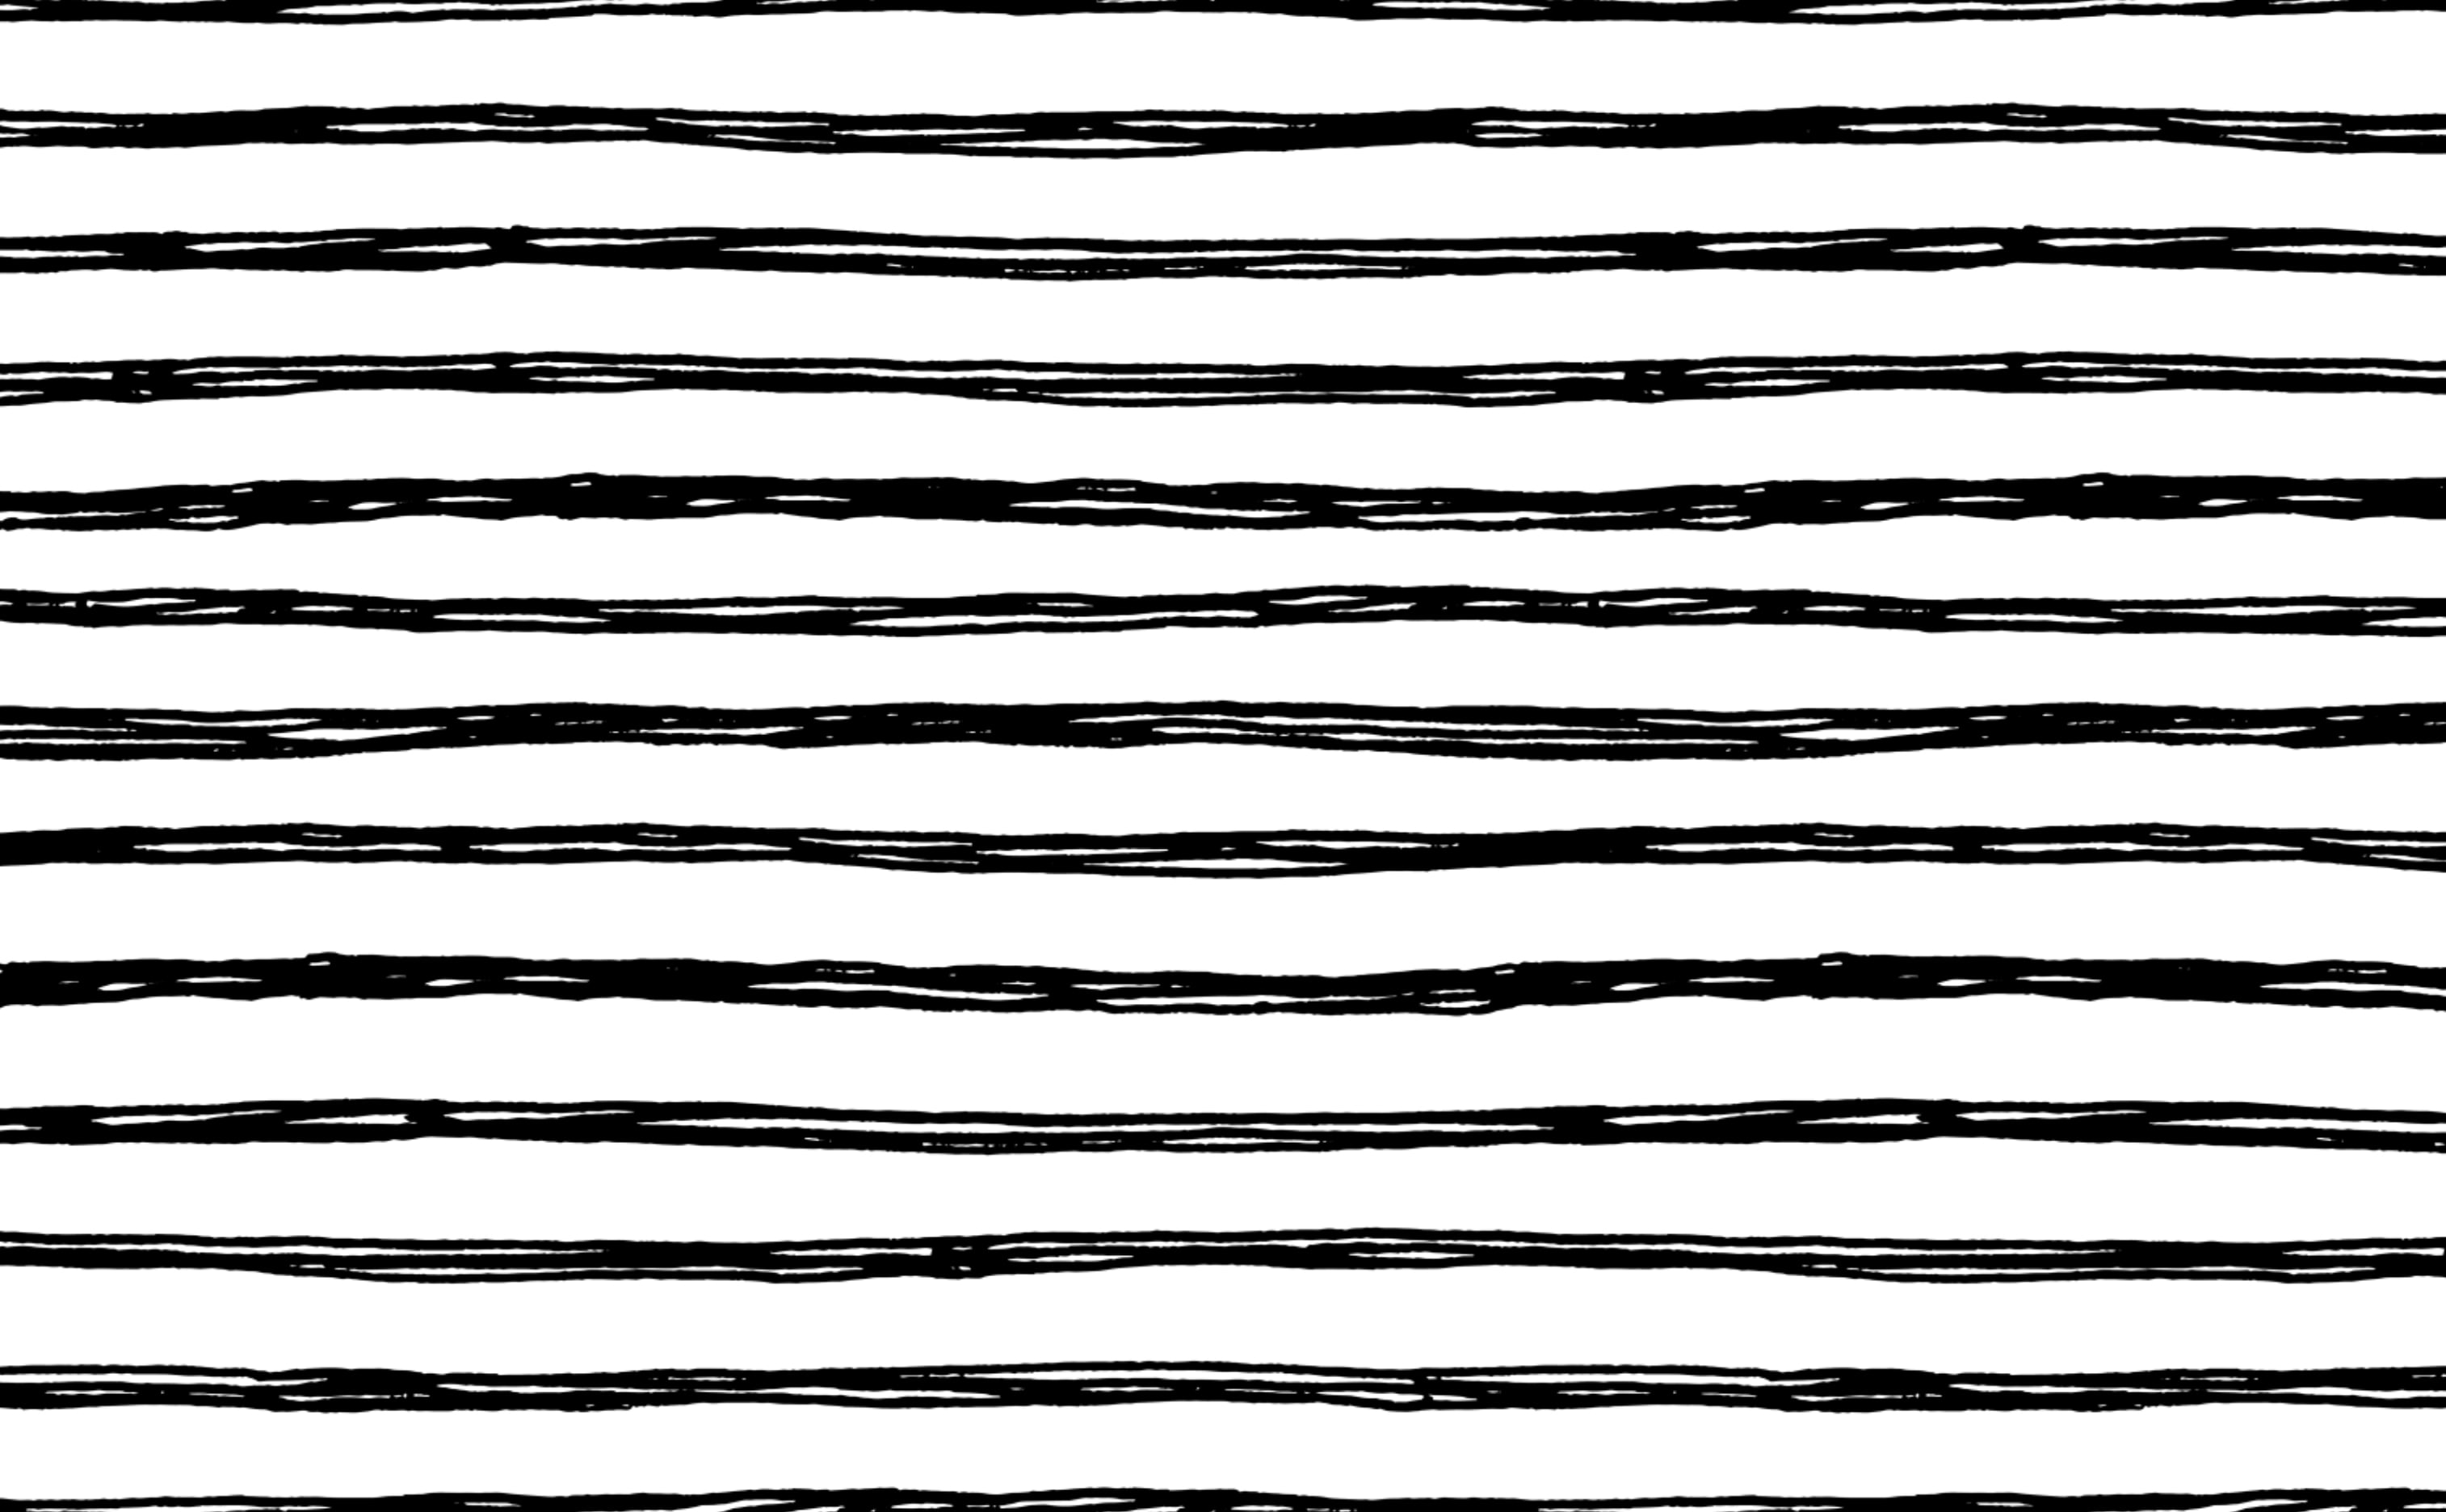 Inked Lines Sample